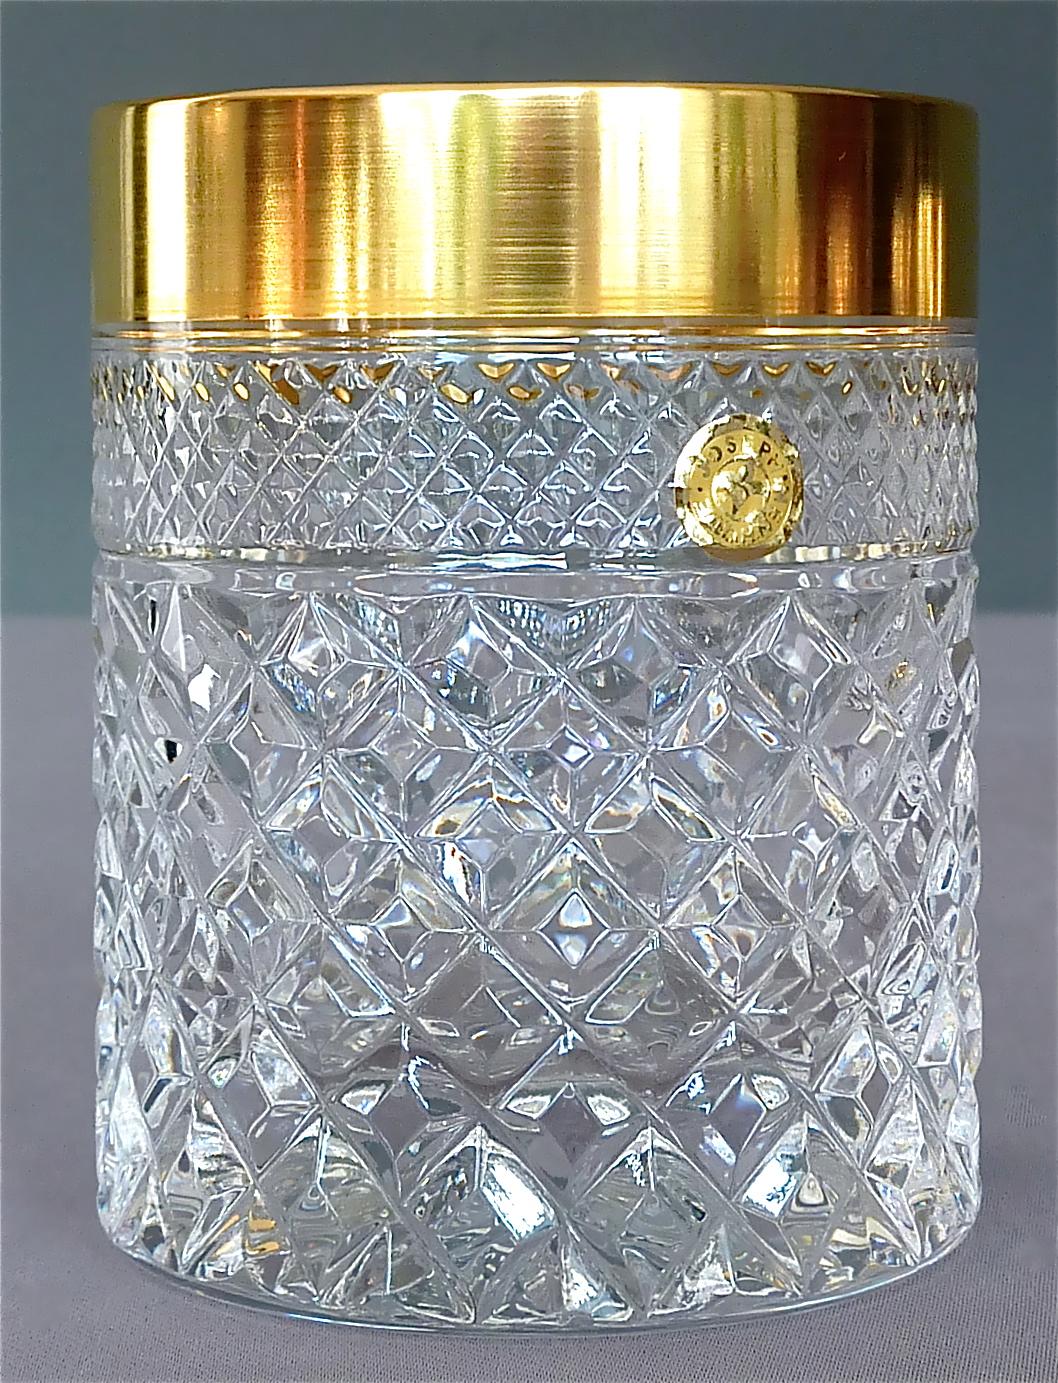 Precious 6 Whisky Glasses Gold Crystal Glass Tumbler Josephinenhuette Moser 5